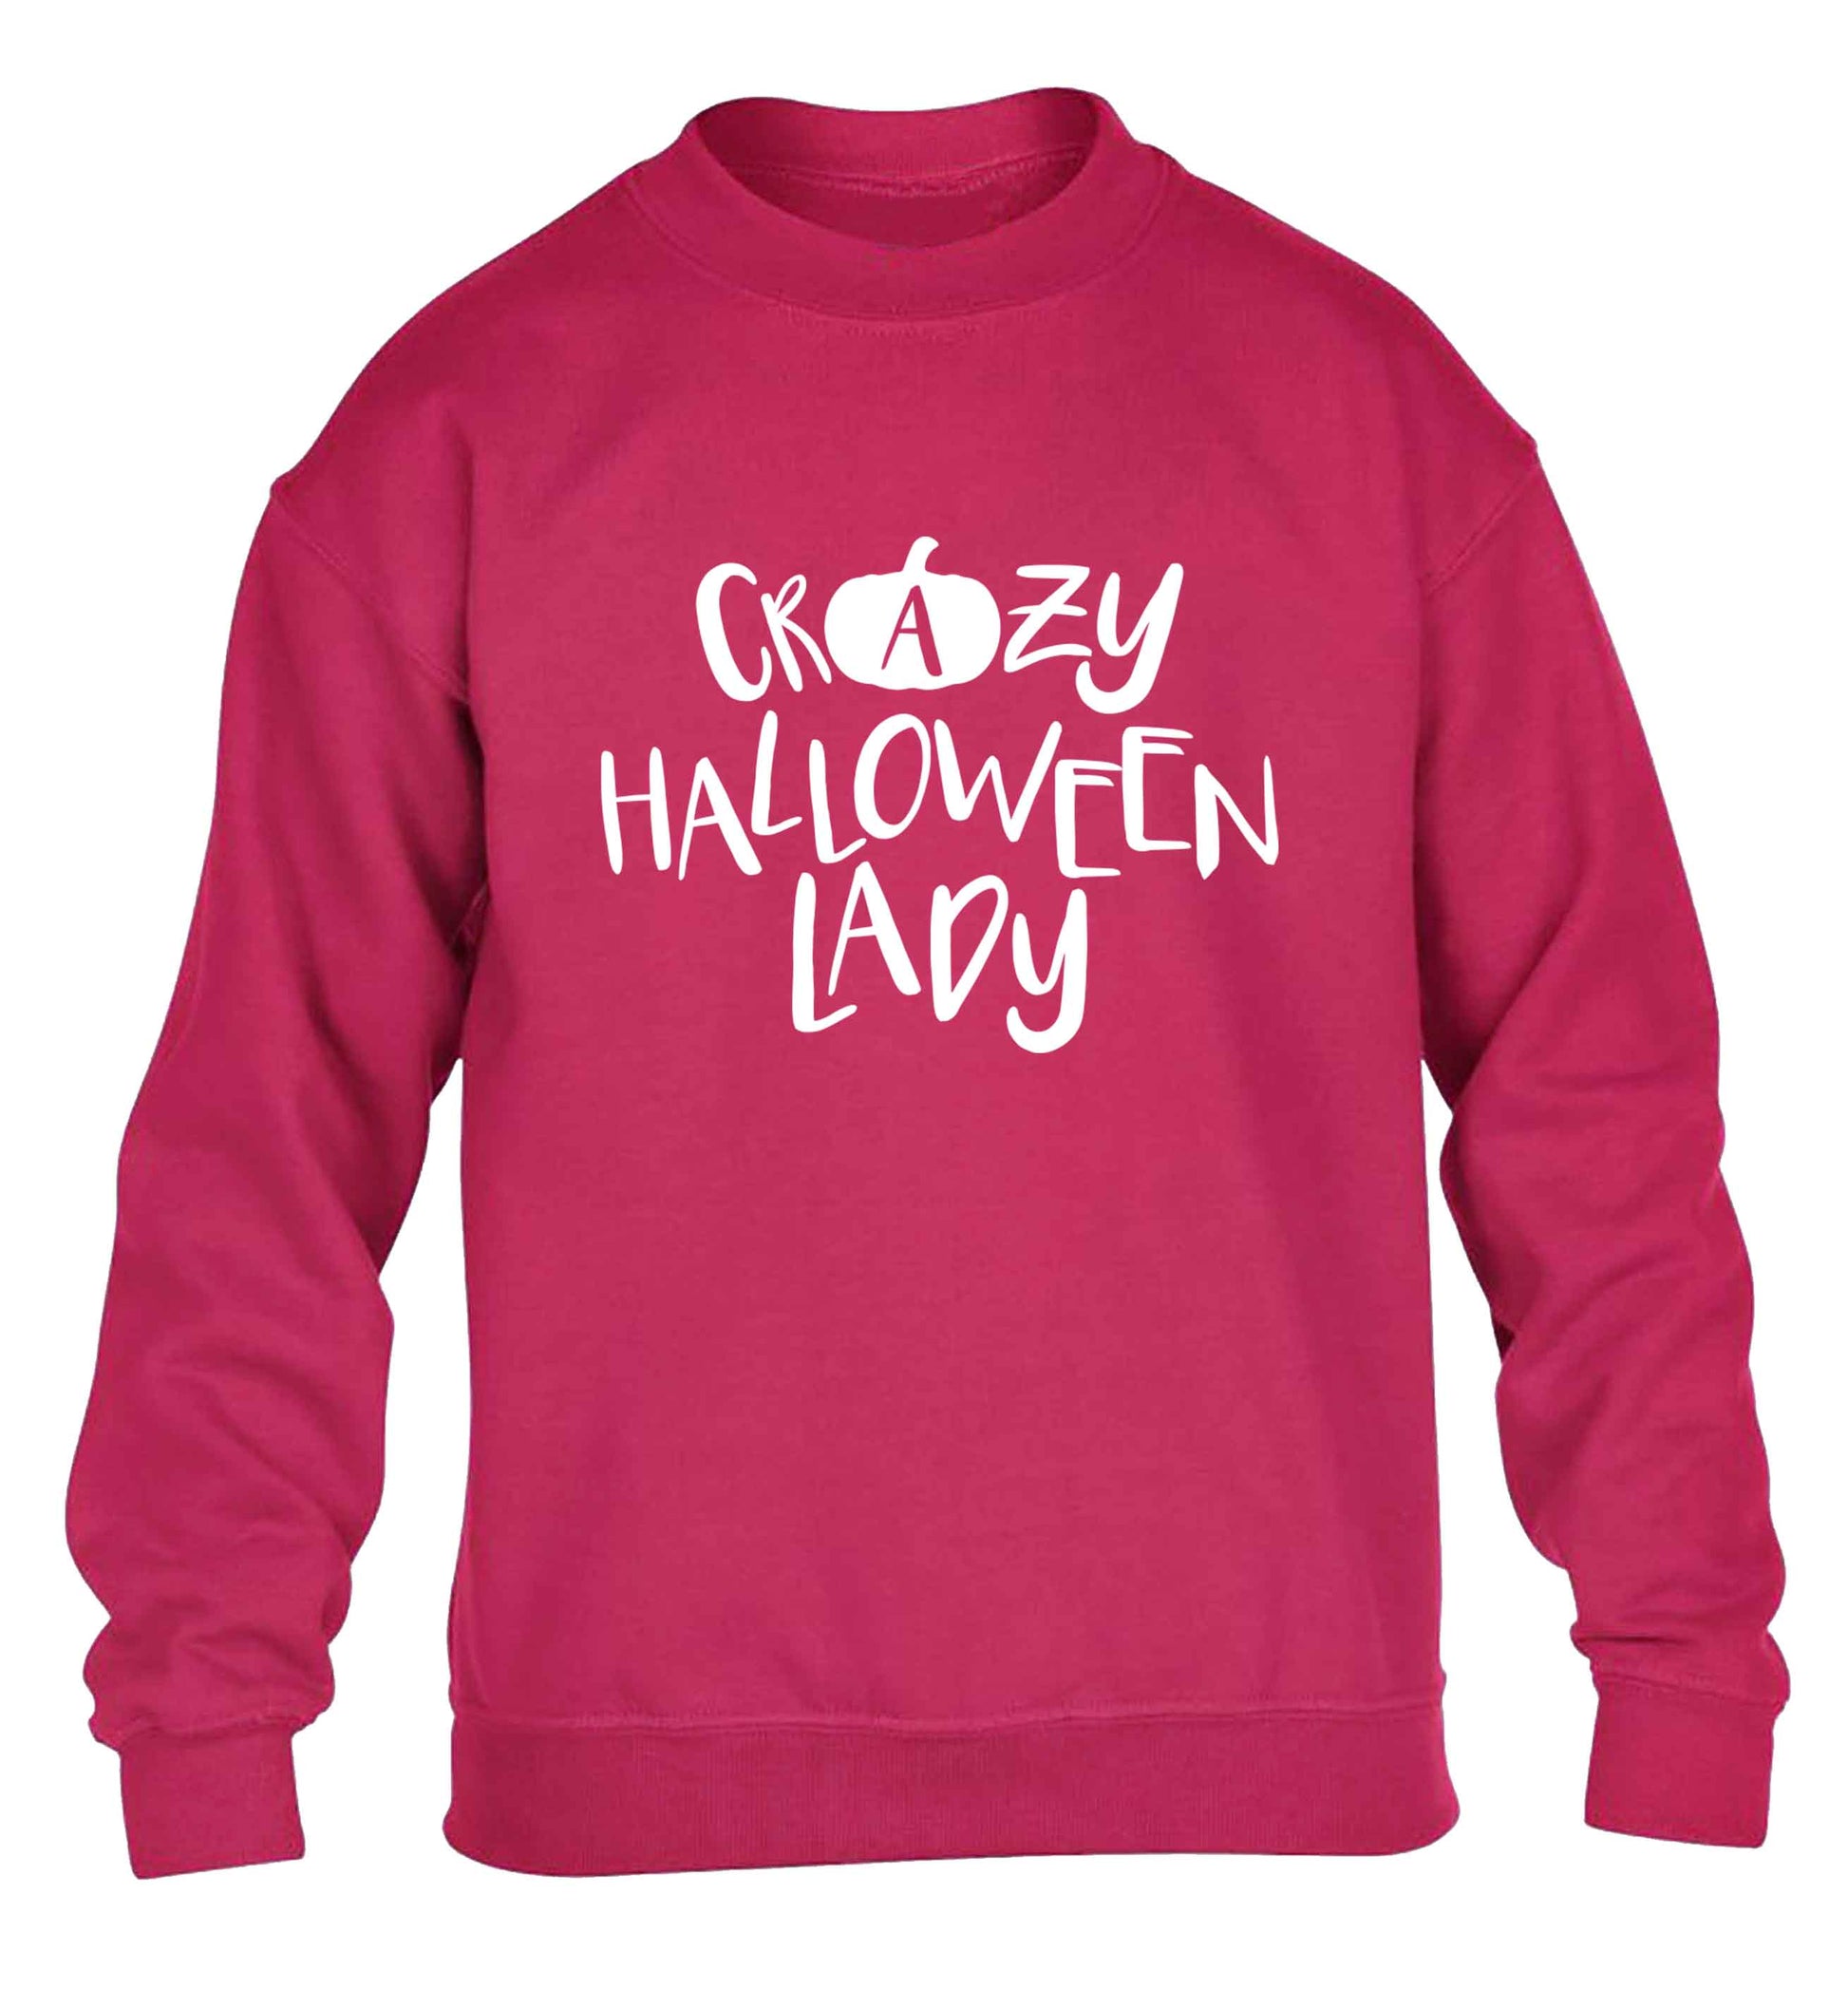 Crazy halloween lady children's pink sweater 12-13 Years